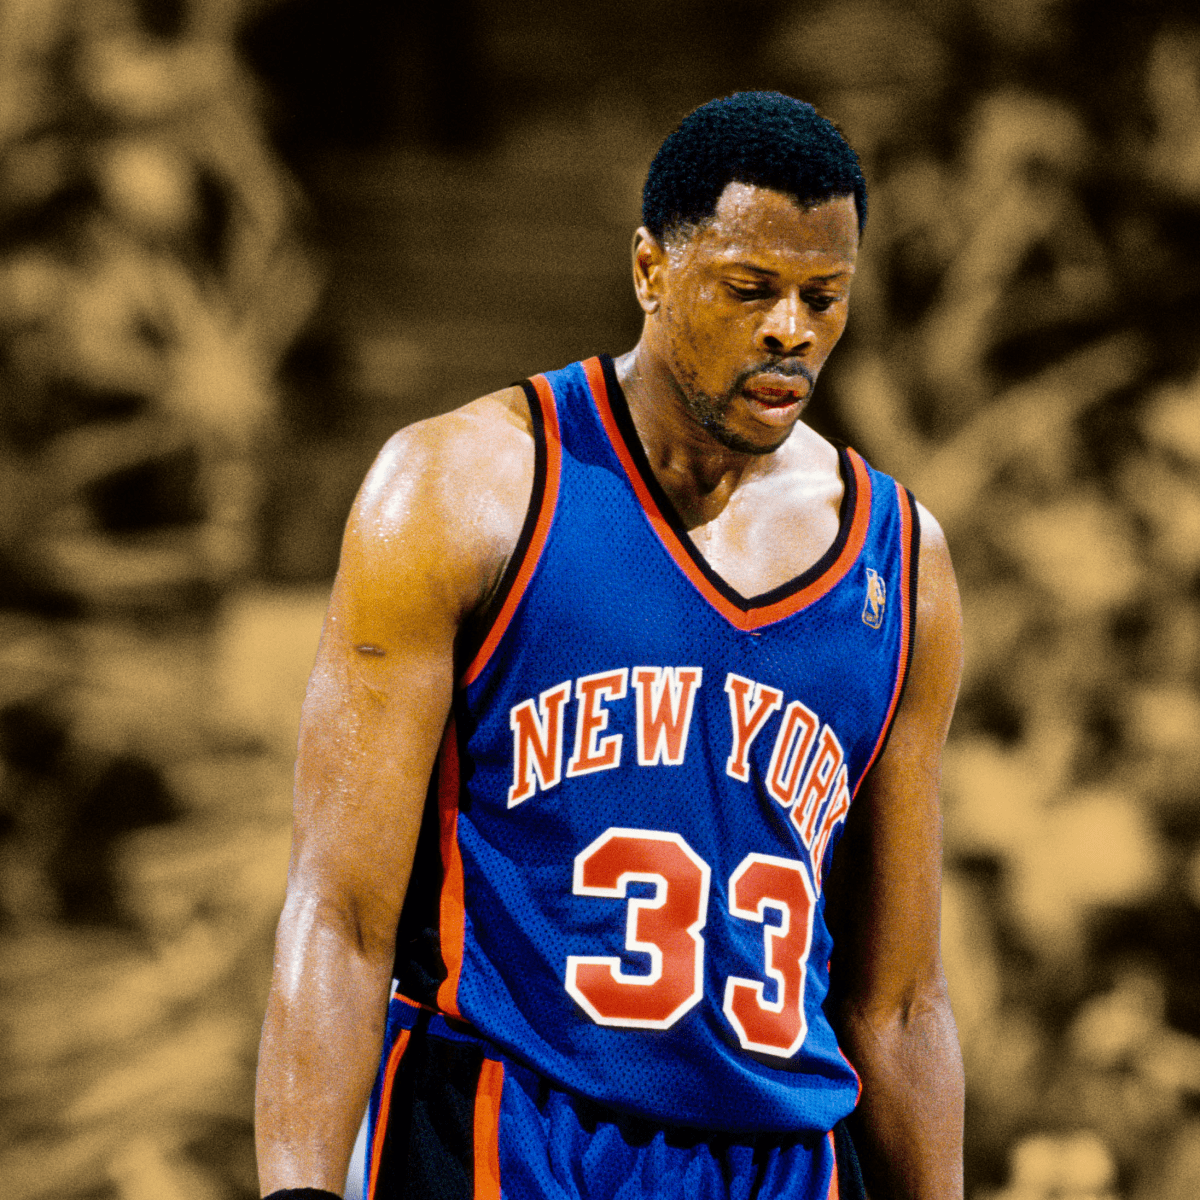 VINTAGE NBA FINALS NEW YORK KNICKS 1994 TEE SHIRT SIZE XL MADE IN USA